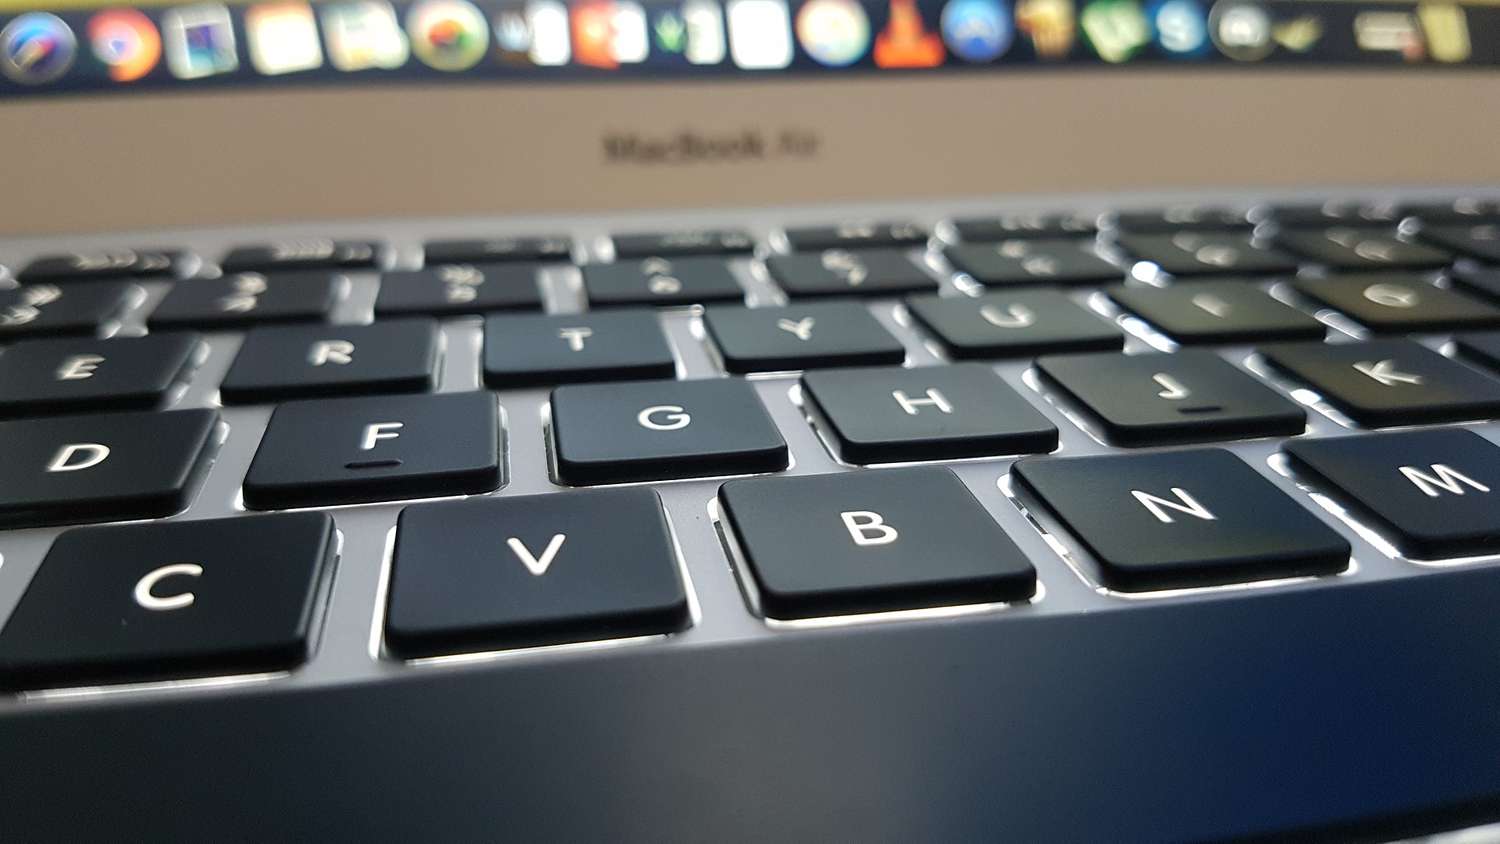 Closeup of Mac keyboard